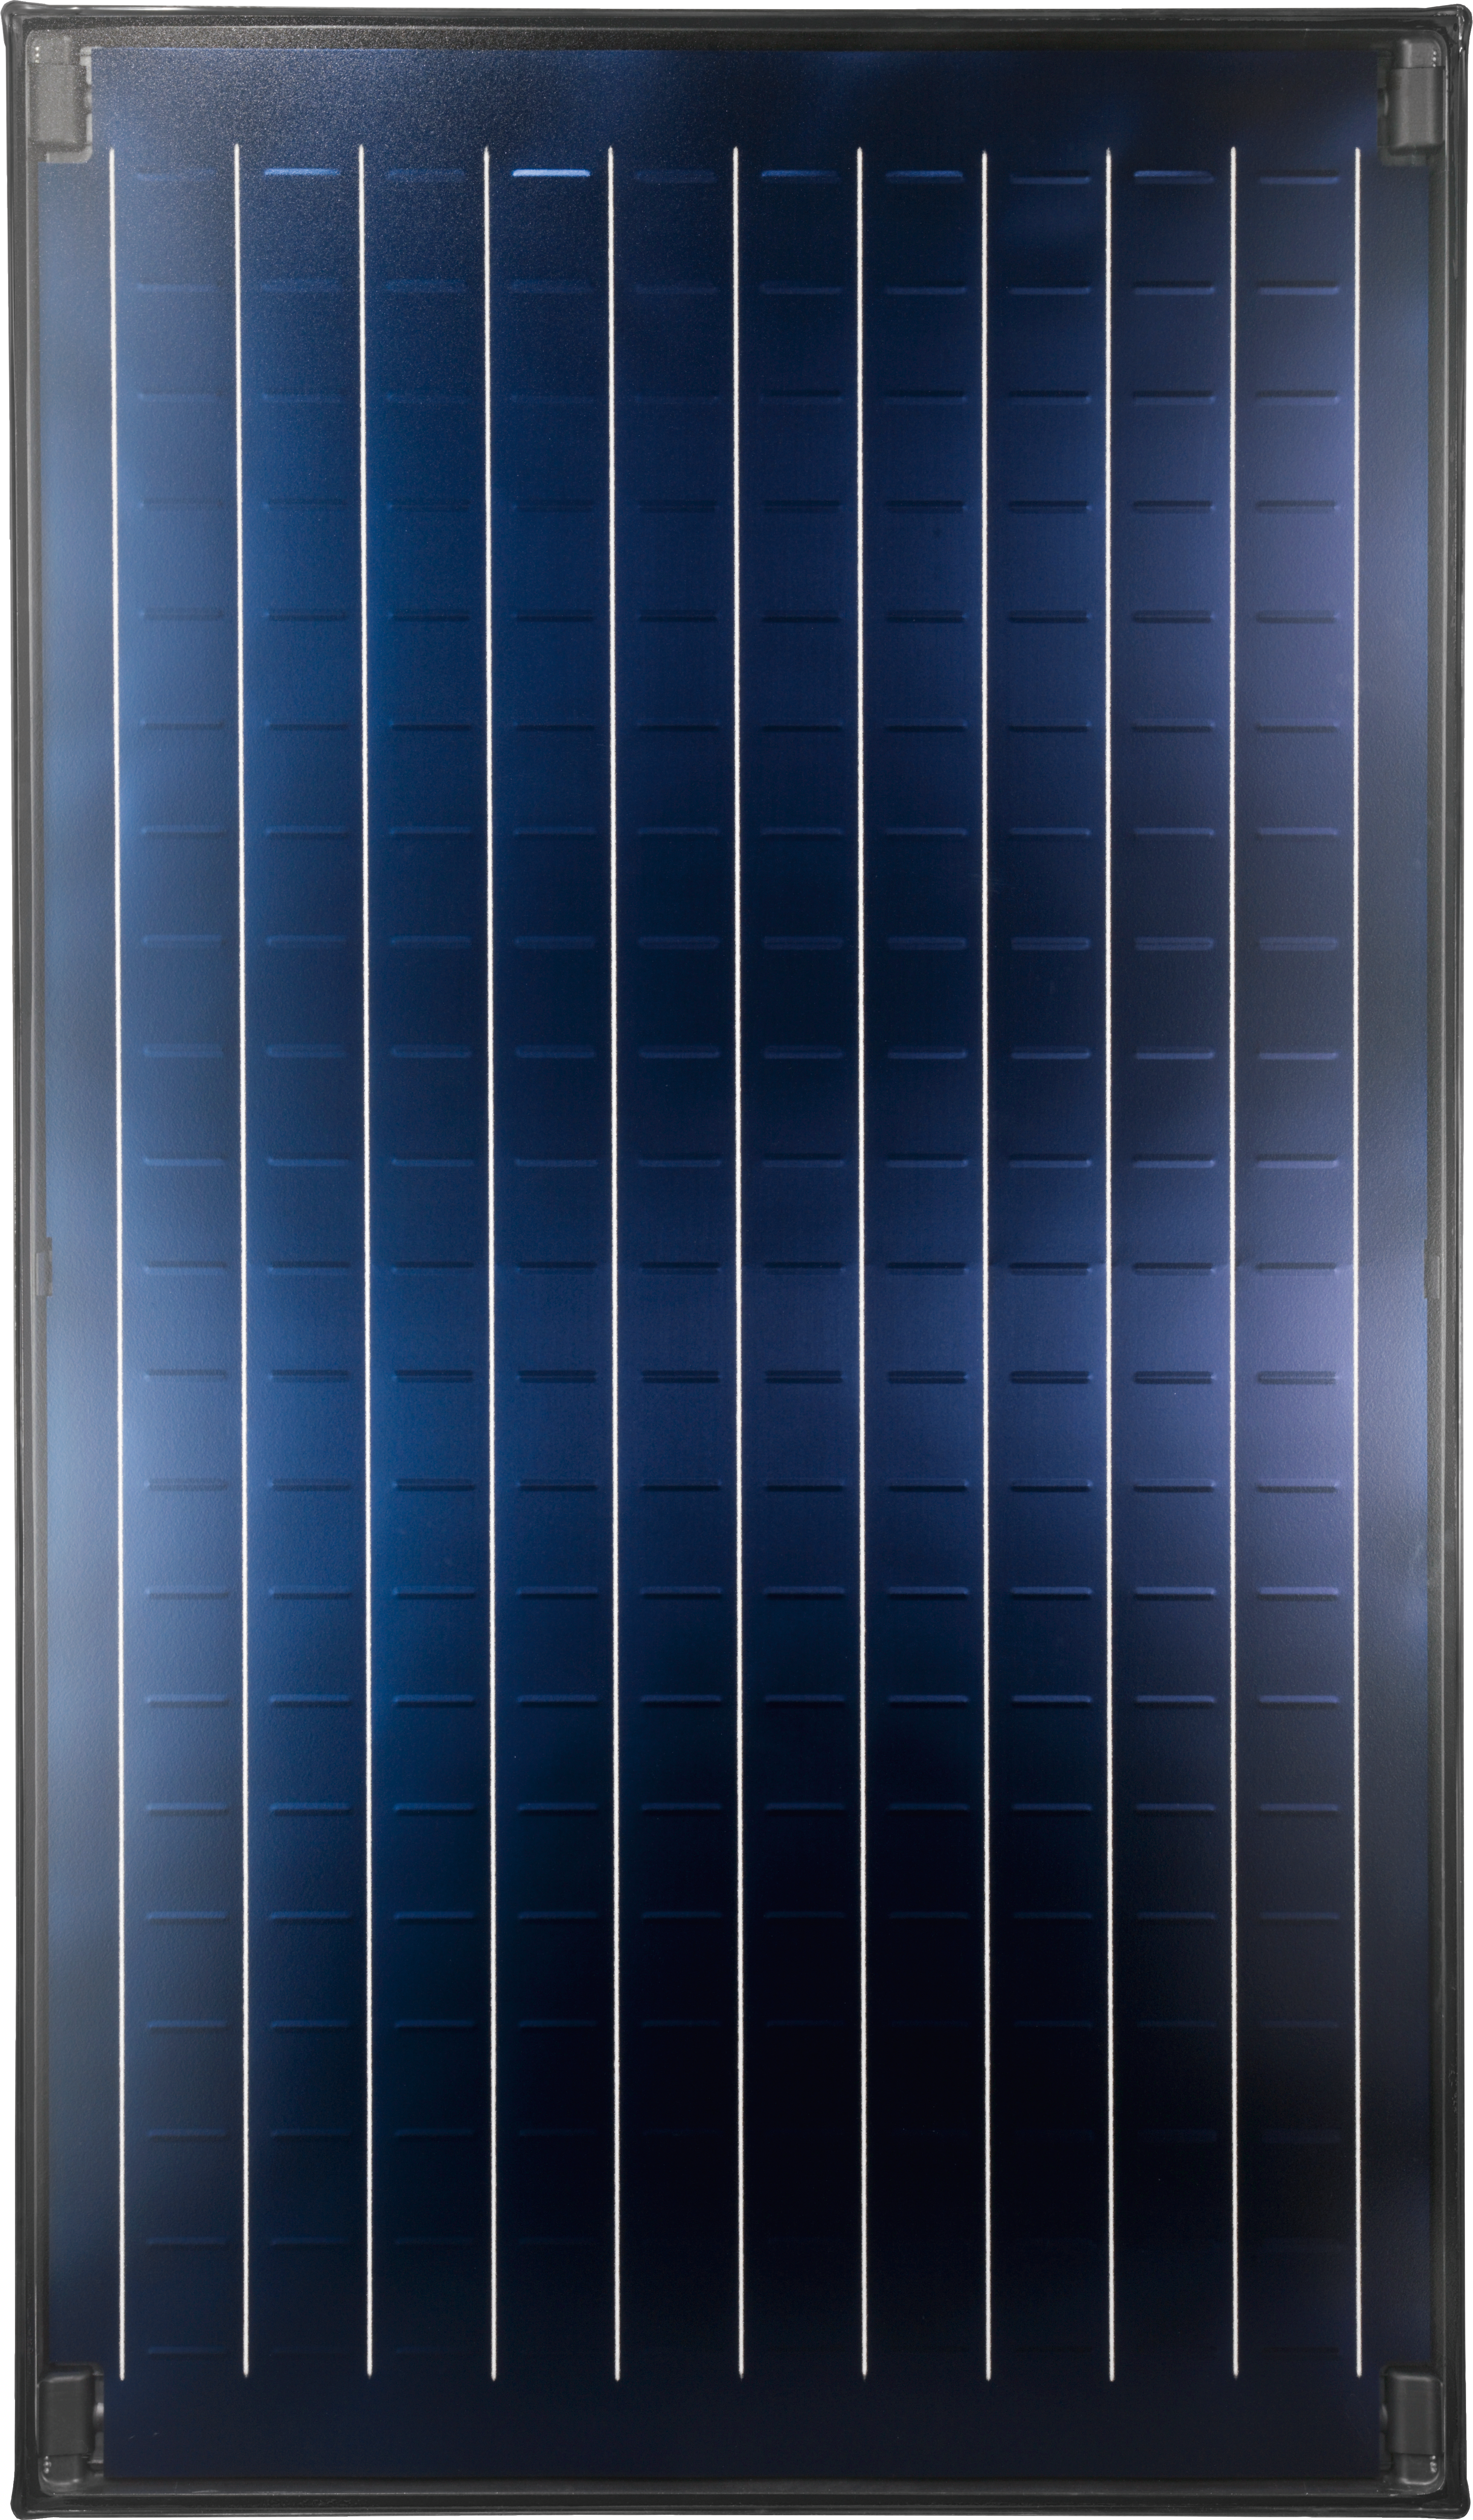 Solar 5000 TF
